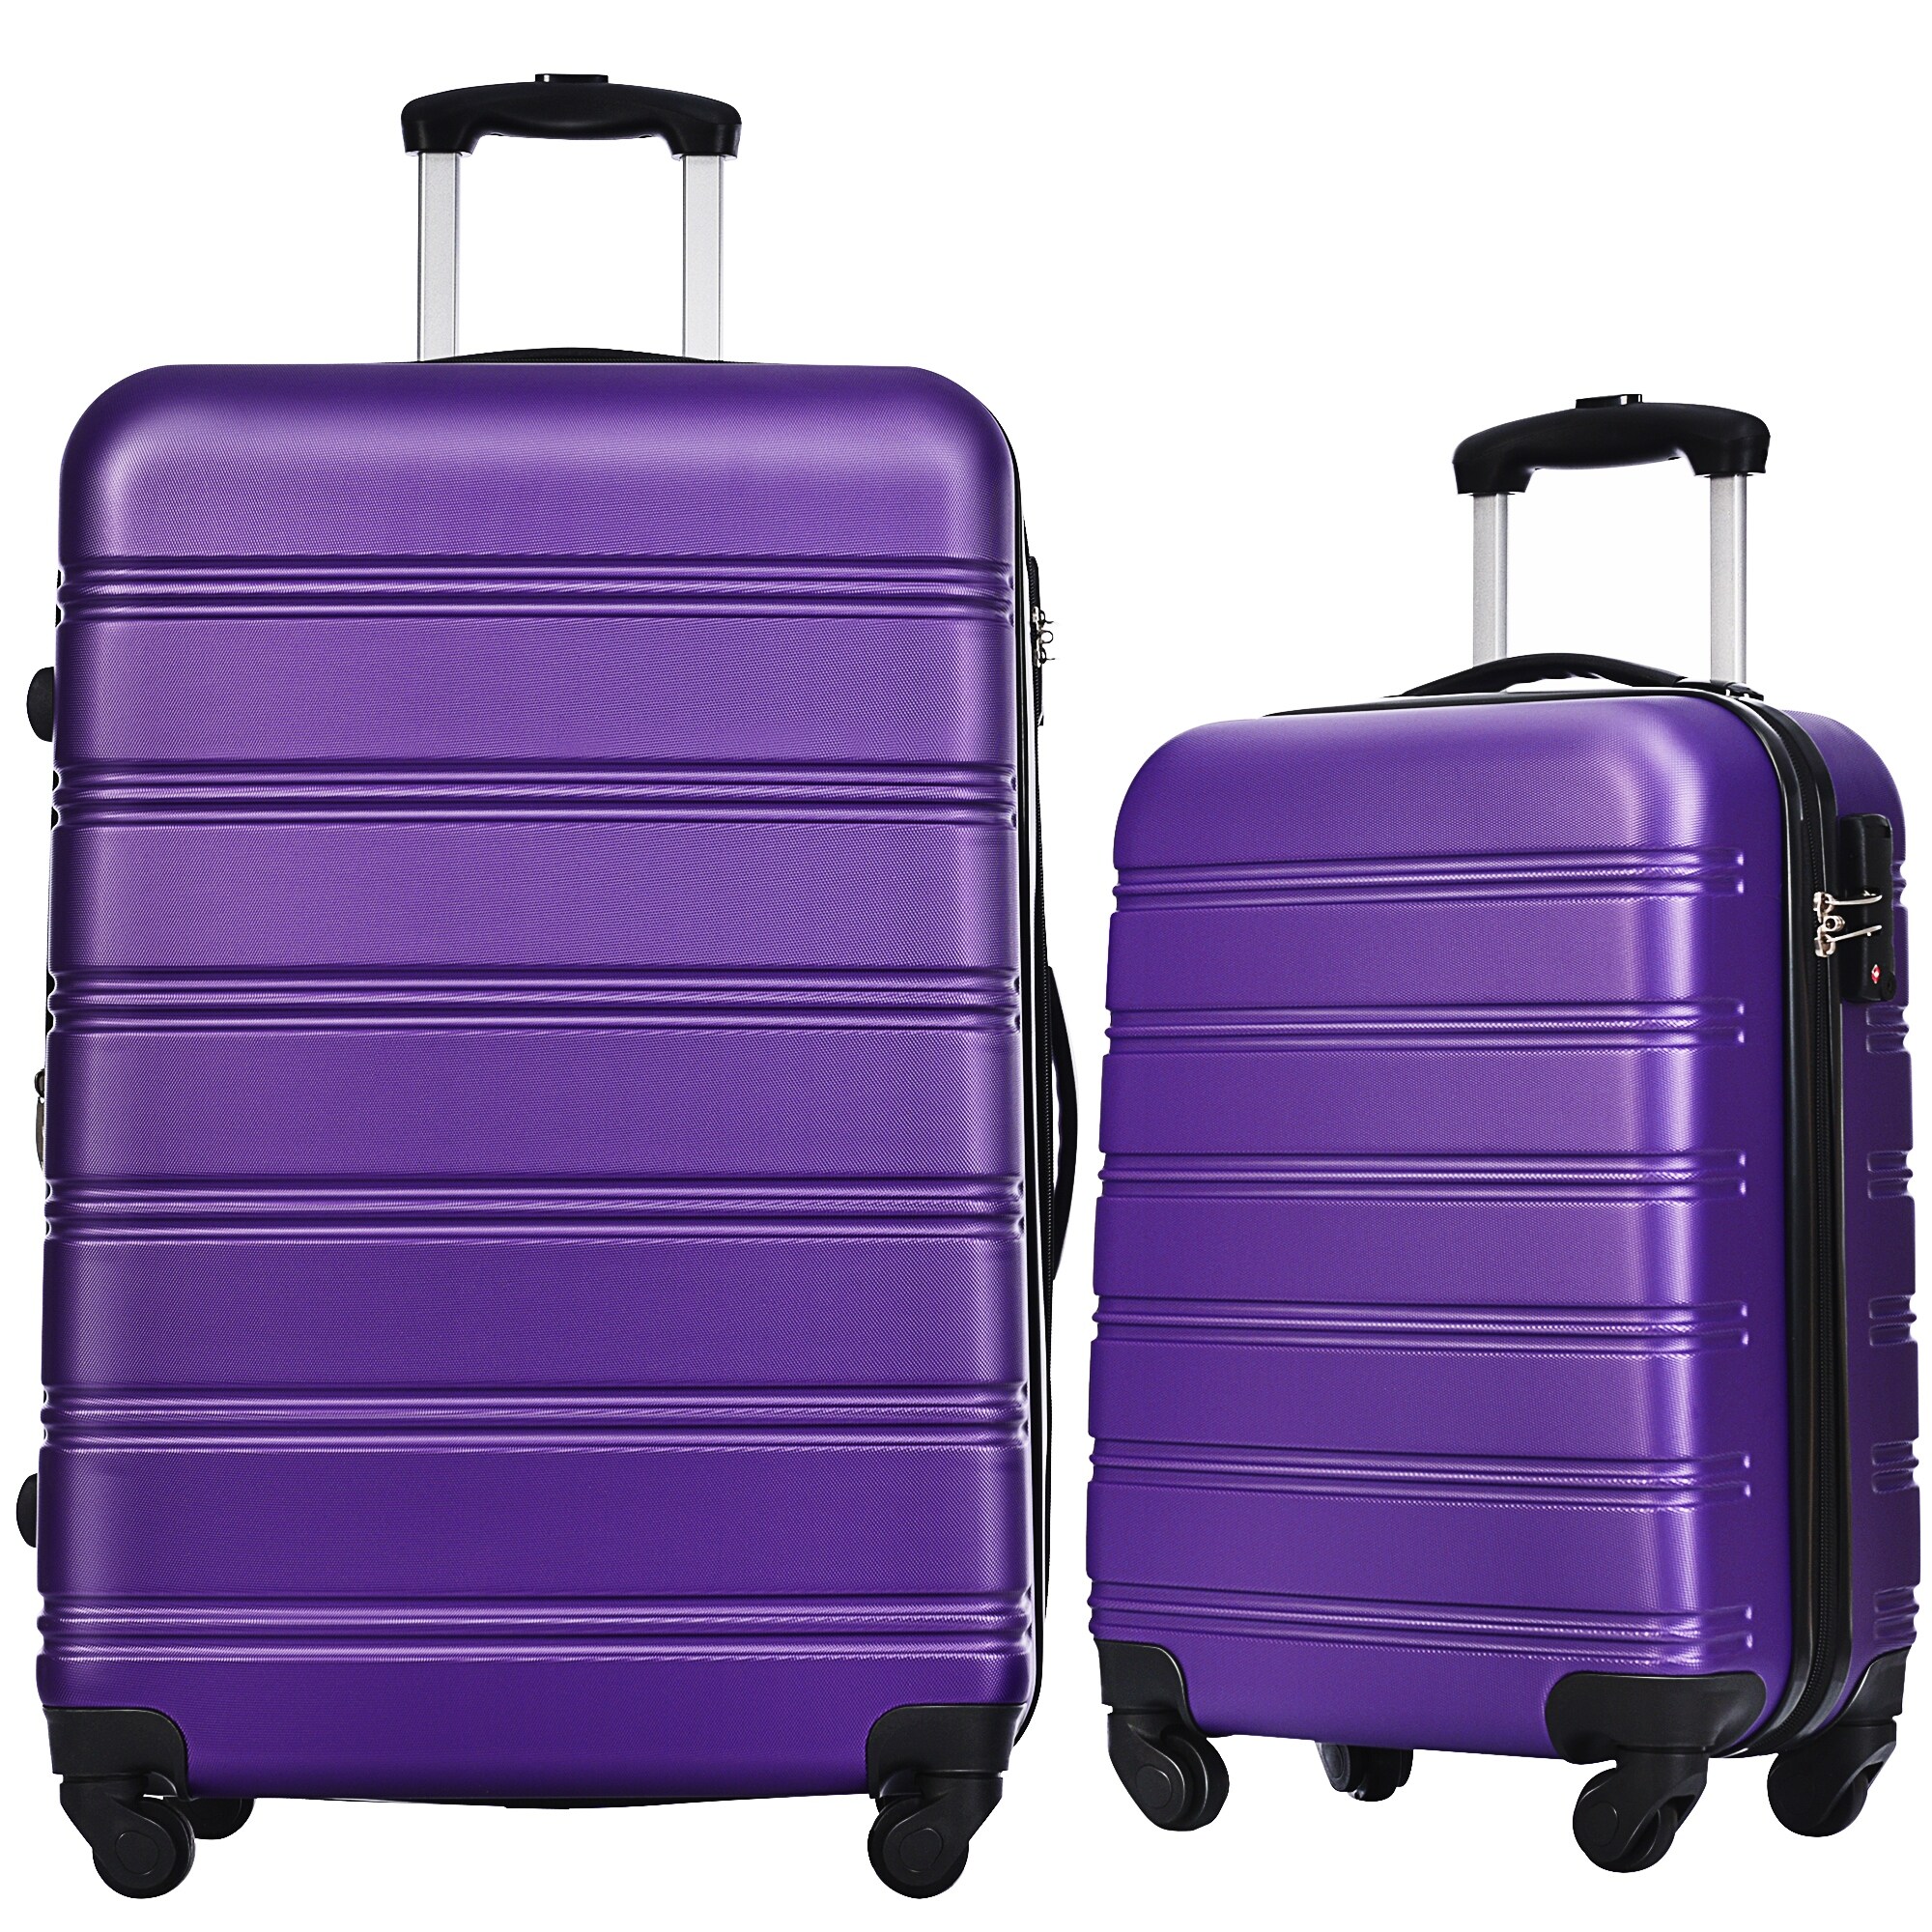 LONG VACATION Luggage Set 4 Piece Luggage Set ABS hardshell TSA Lock  Spinner Wheels Luggage Carry on Suitcase (BLACK-BROWN, 6 piece set)